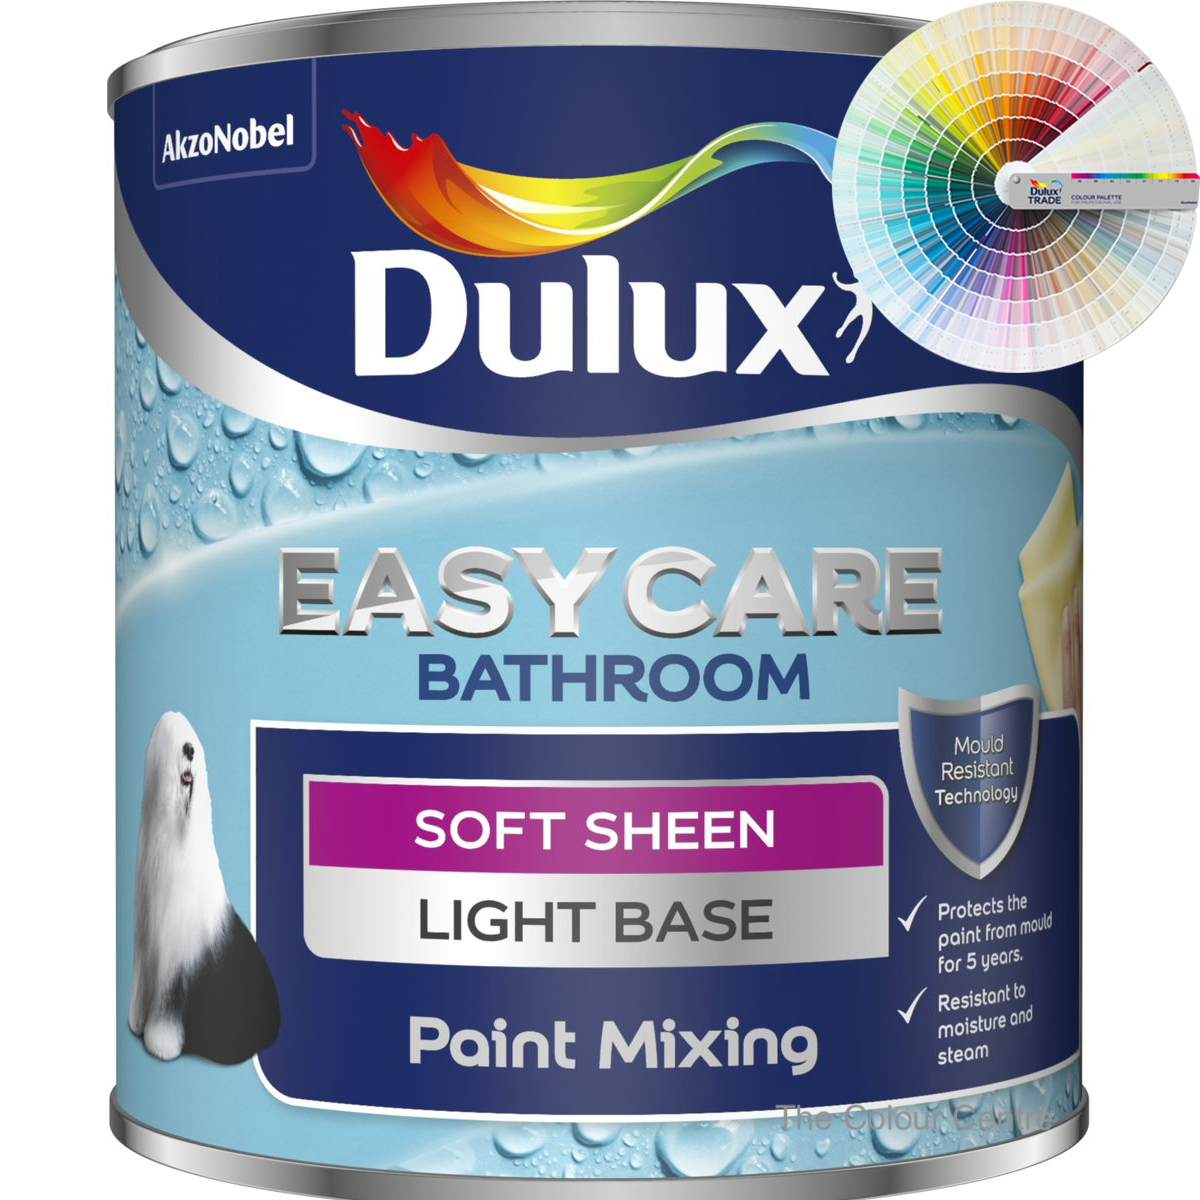 Dulux Easycare Bathroom Soft Sheen Tinted